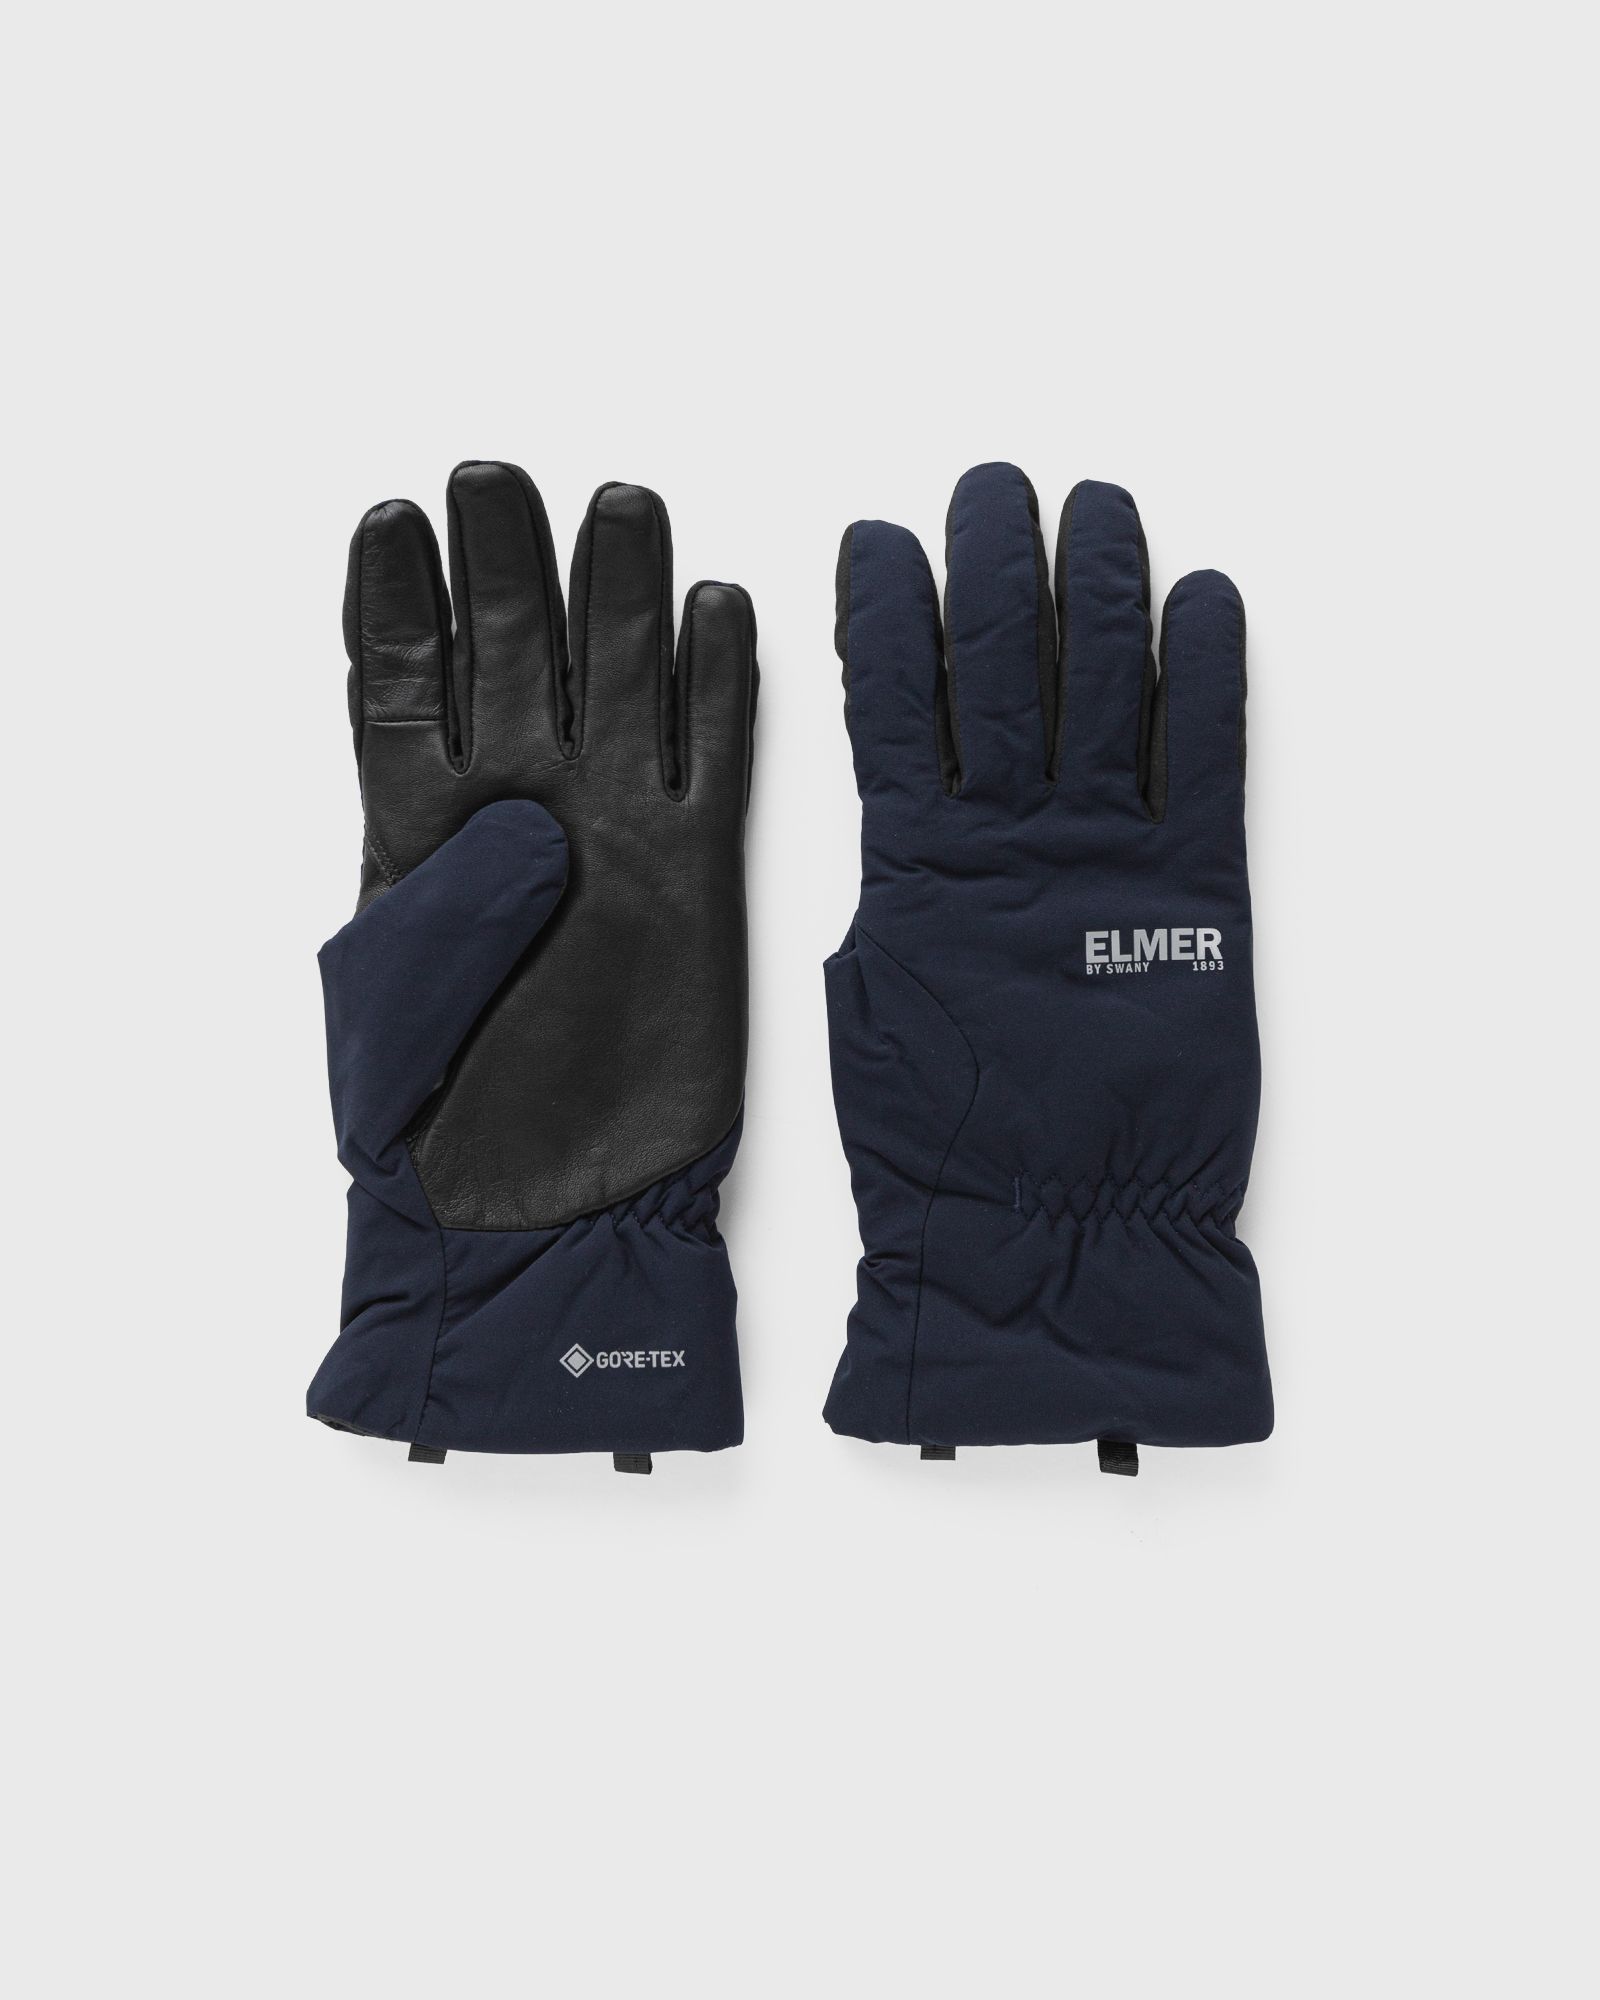 Elmer by Swany - goretex line men gloves blue in größe:l